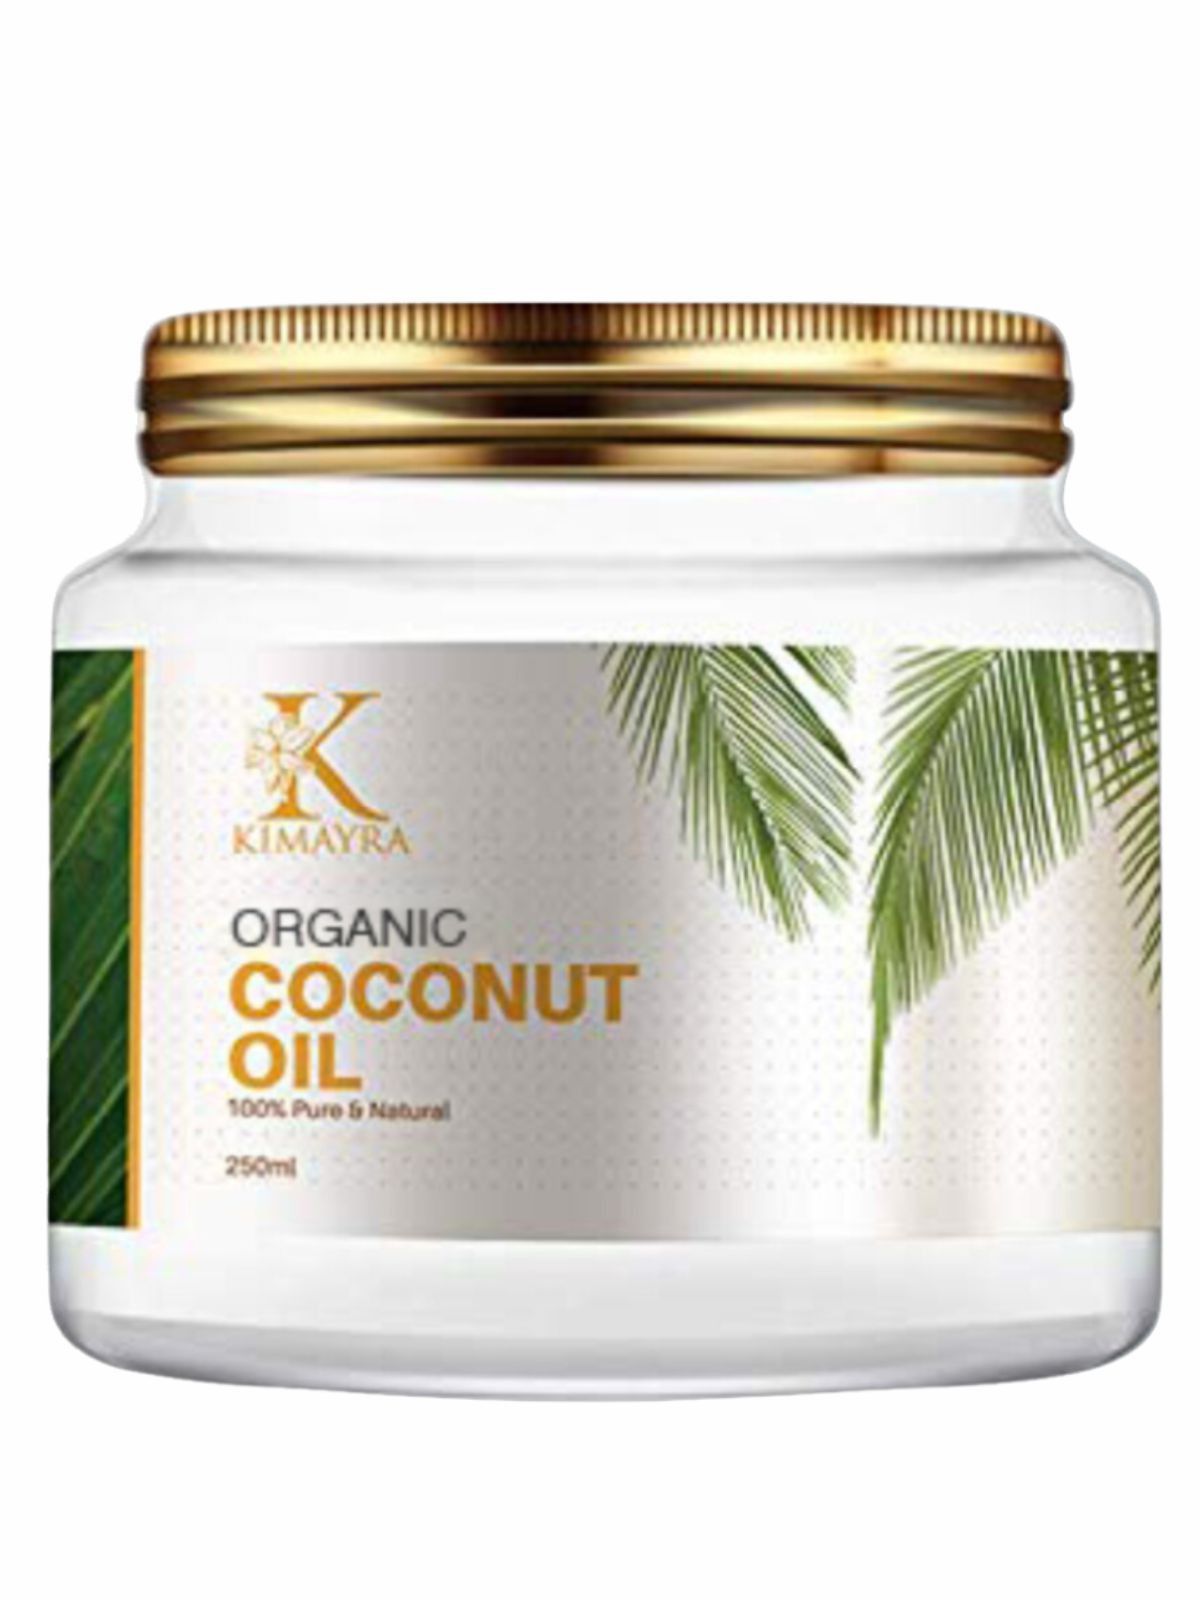     			Kimayra Hair Growth Coconut Oil 250 ml ( Pack of 1 )